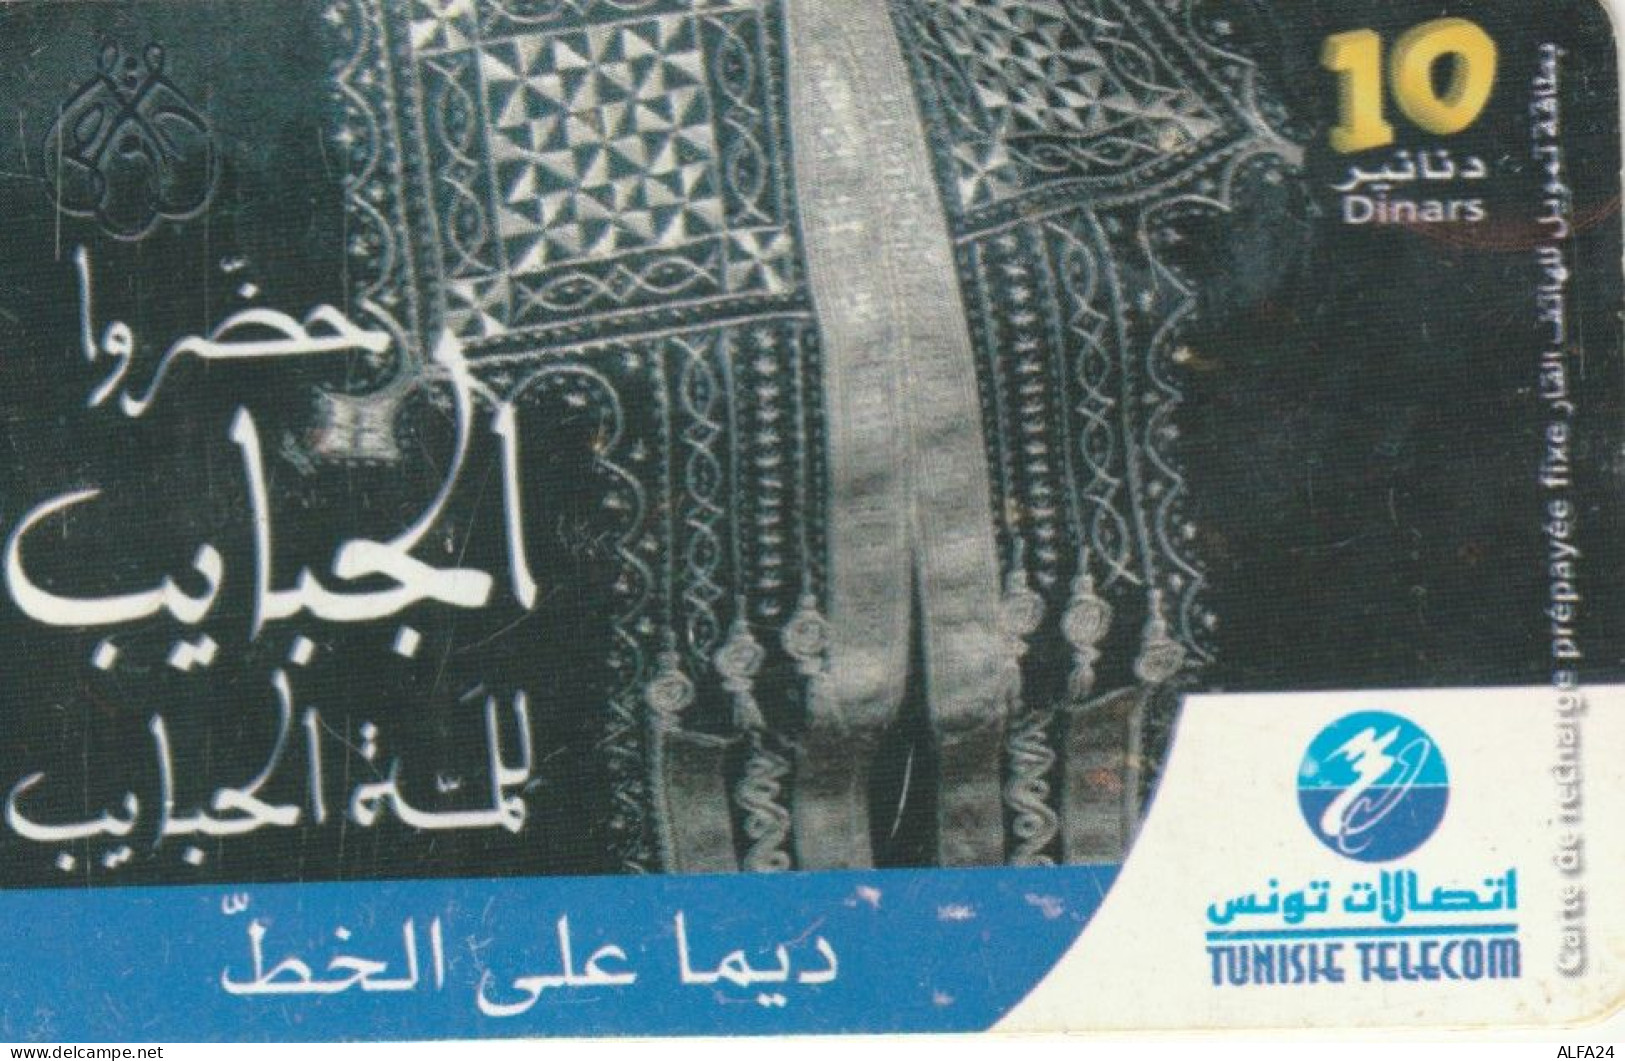 PREPAID PHONE CARD TUNISIA (CK1535 - Tunisia